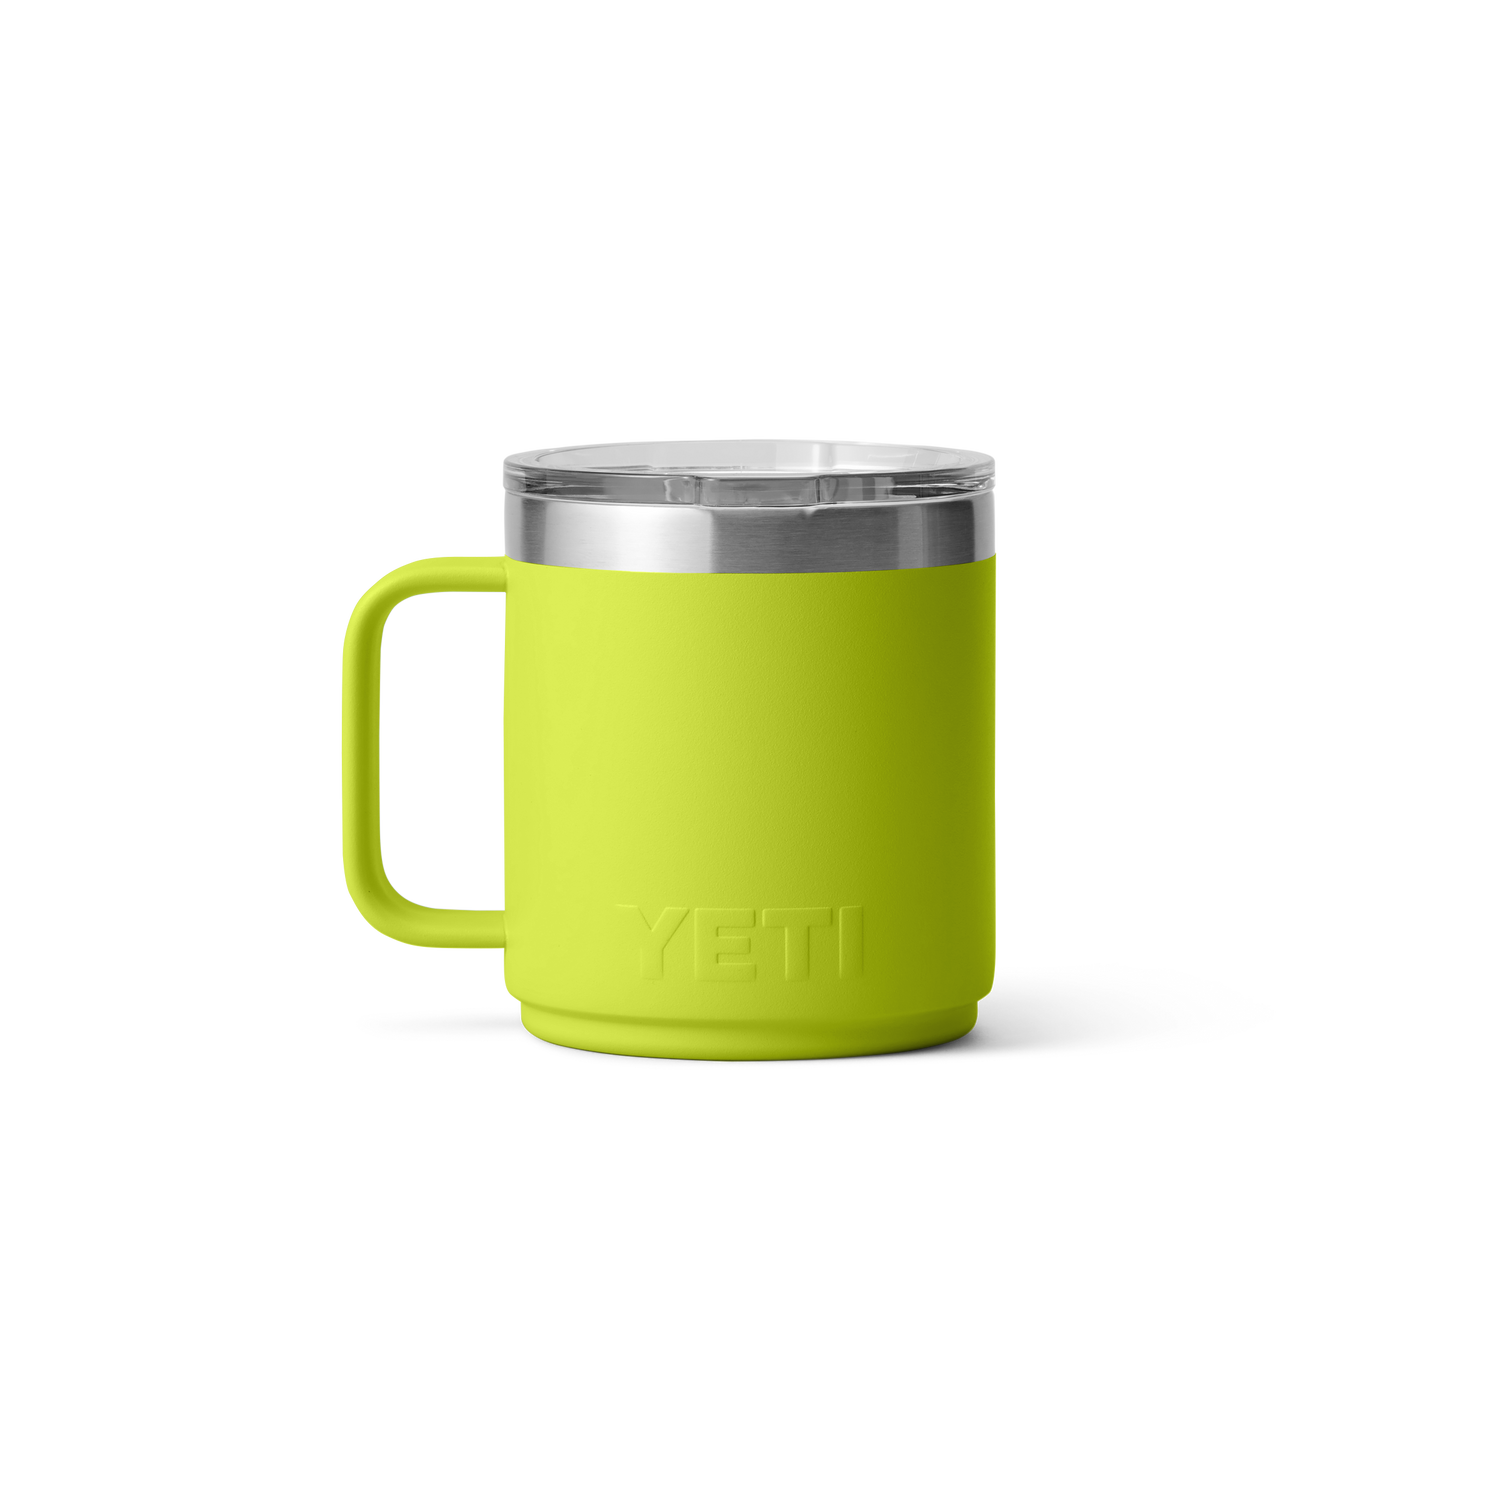 Yeti Rambler 24 oz Mug with Original Lid - Chartreuse